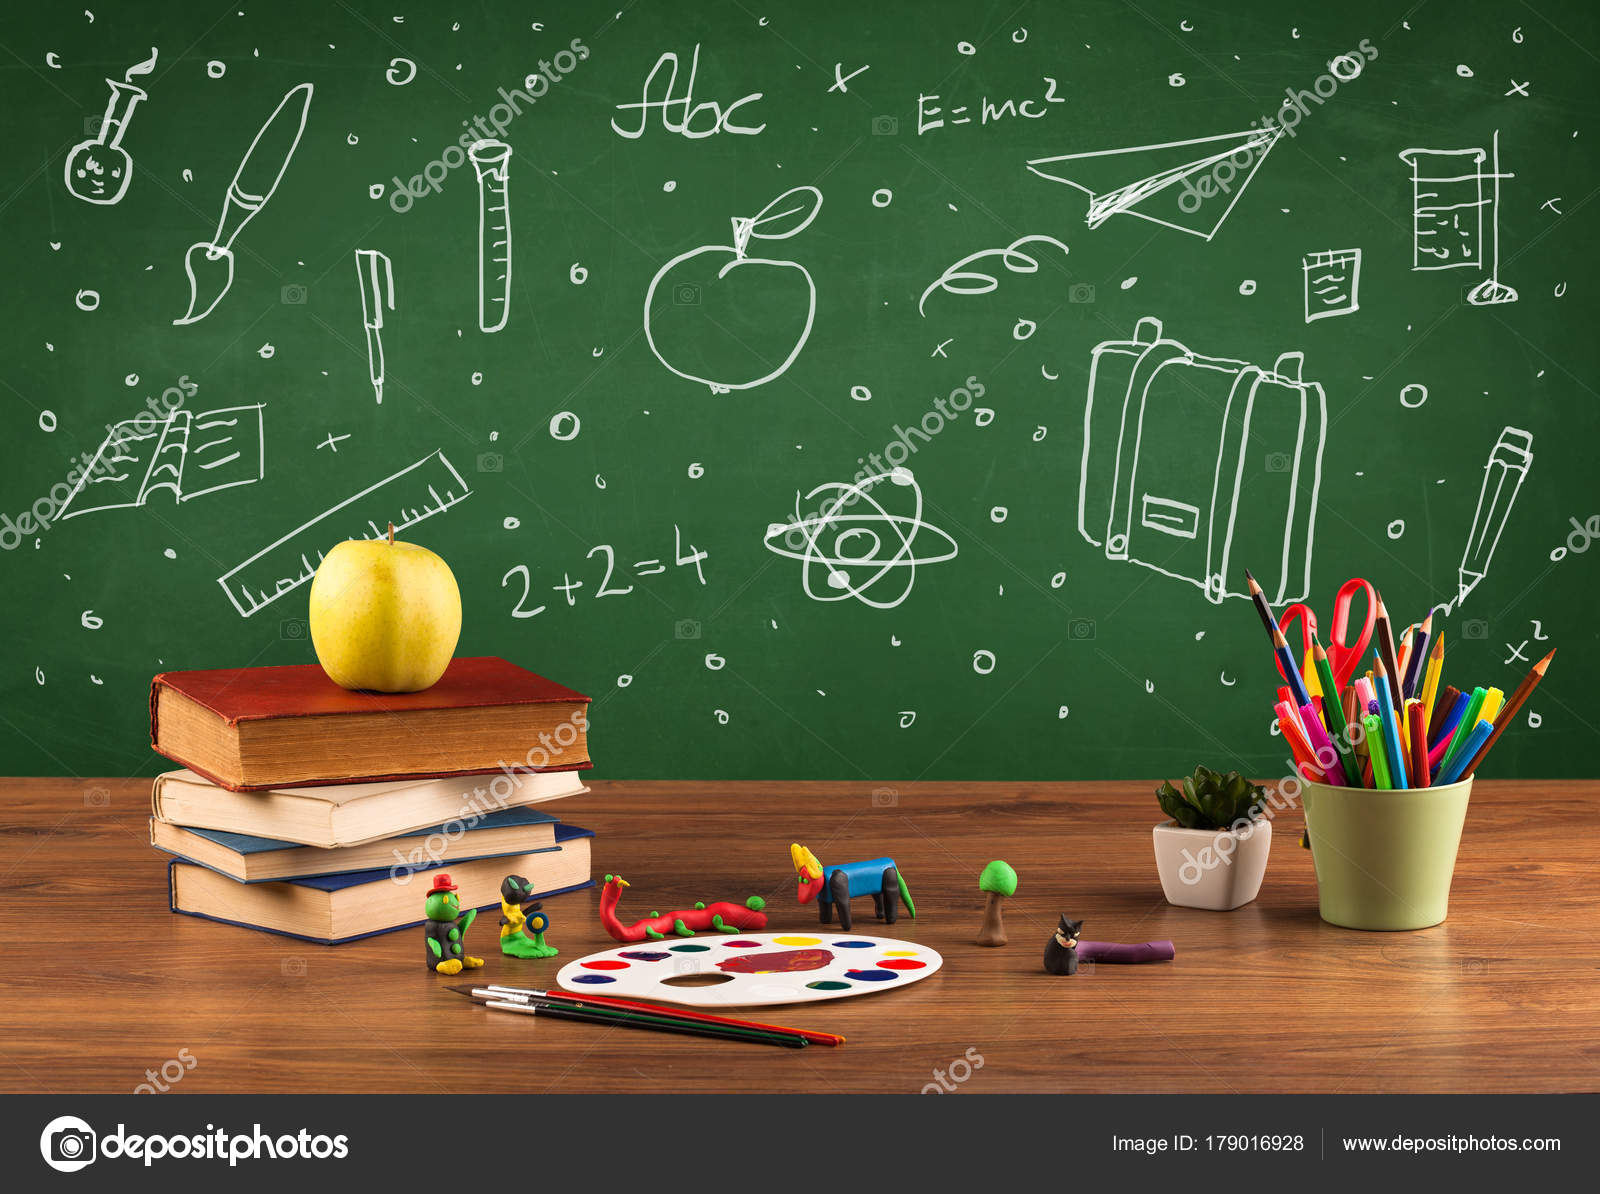 Colored chalk stock image. Image of education, background - 32461677